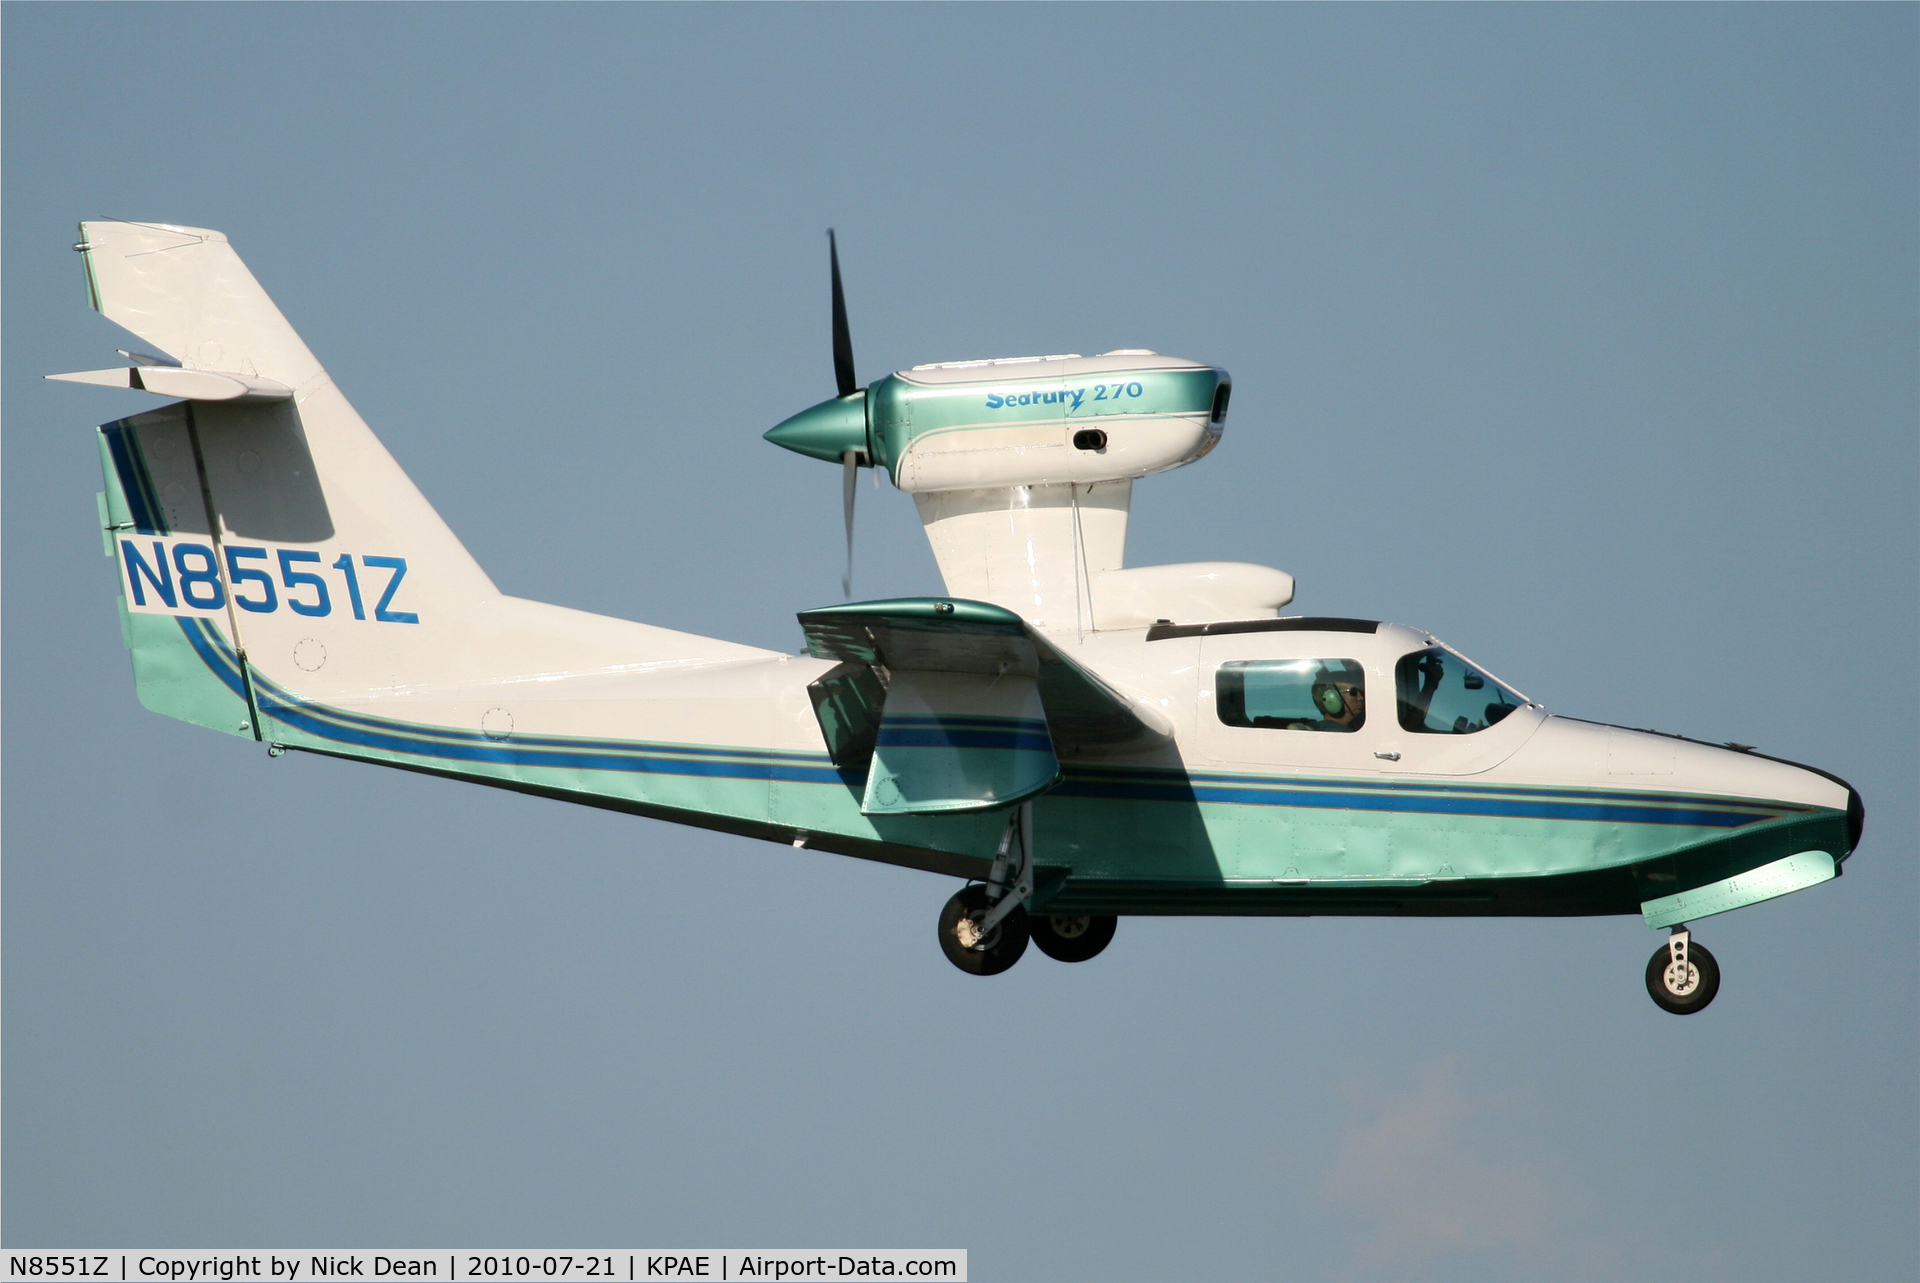 N8551Z, Aerofab Inc LAKE 250 C/N 130, KPAE